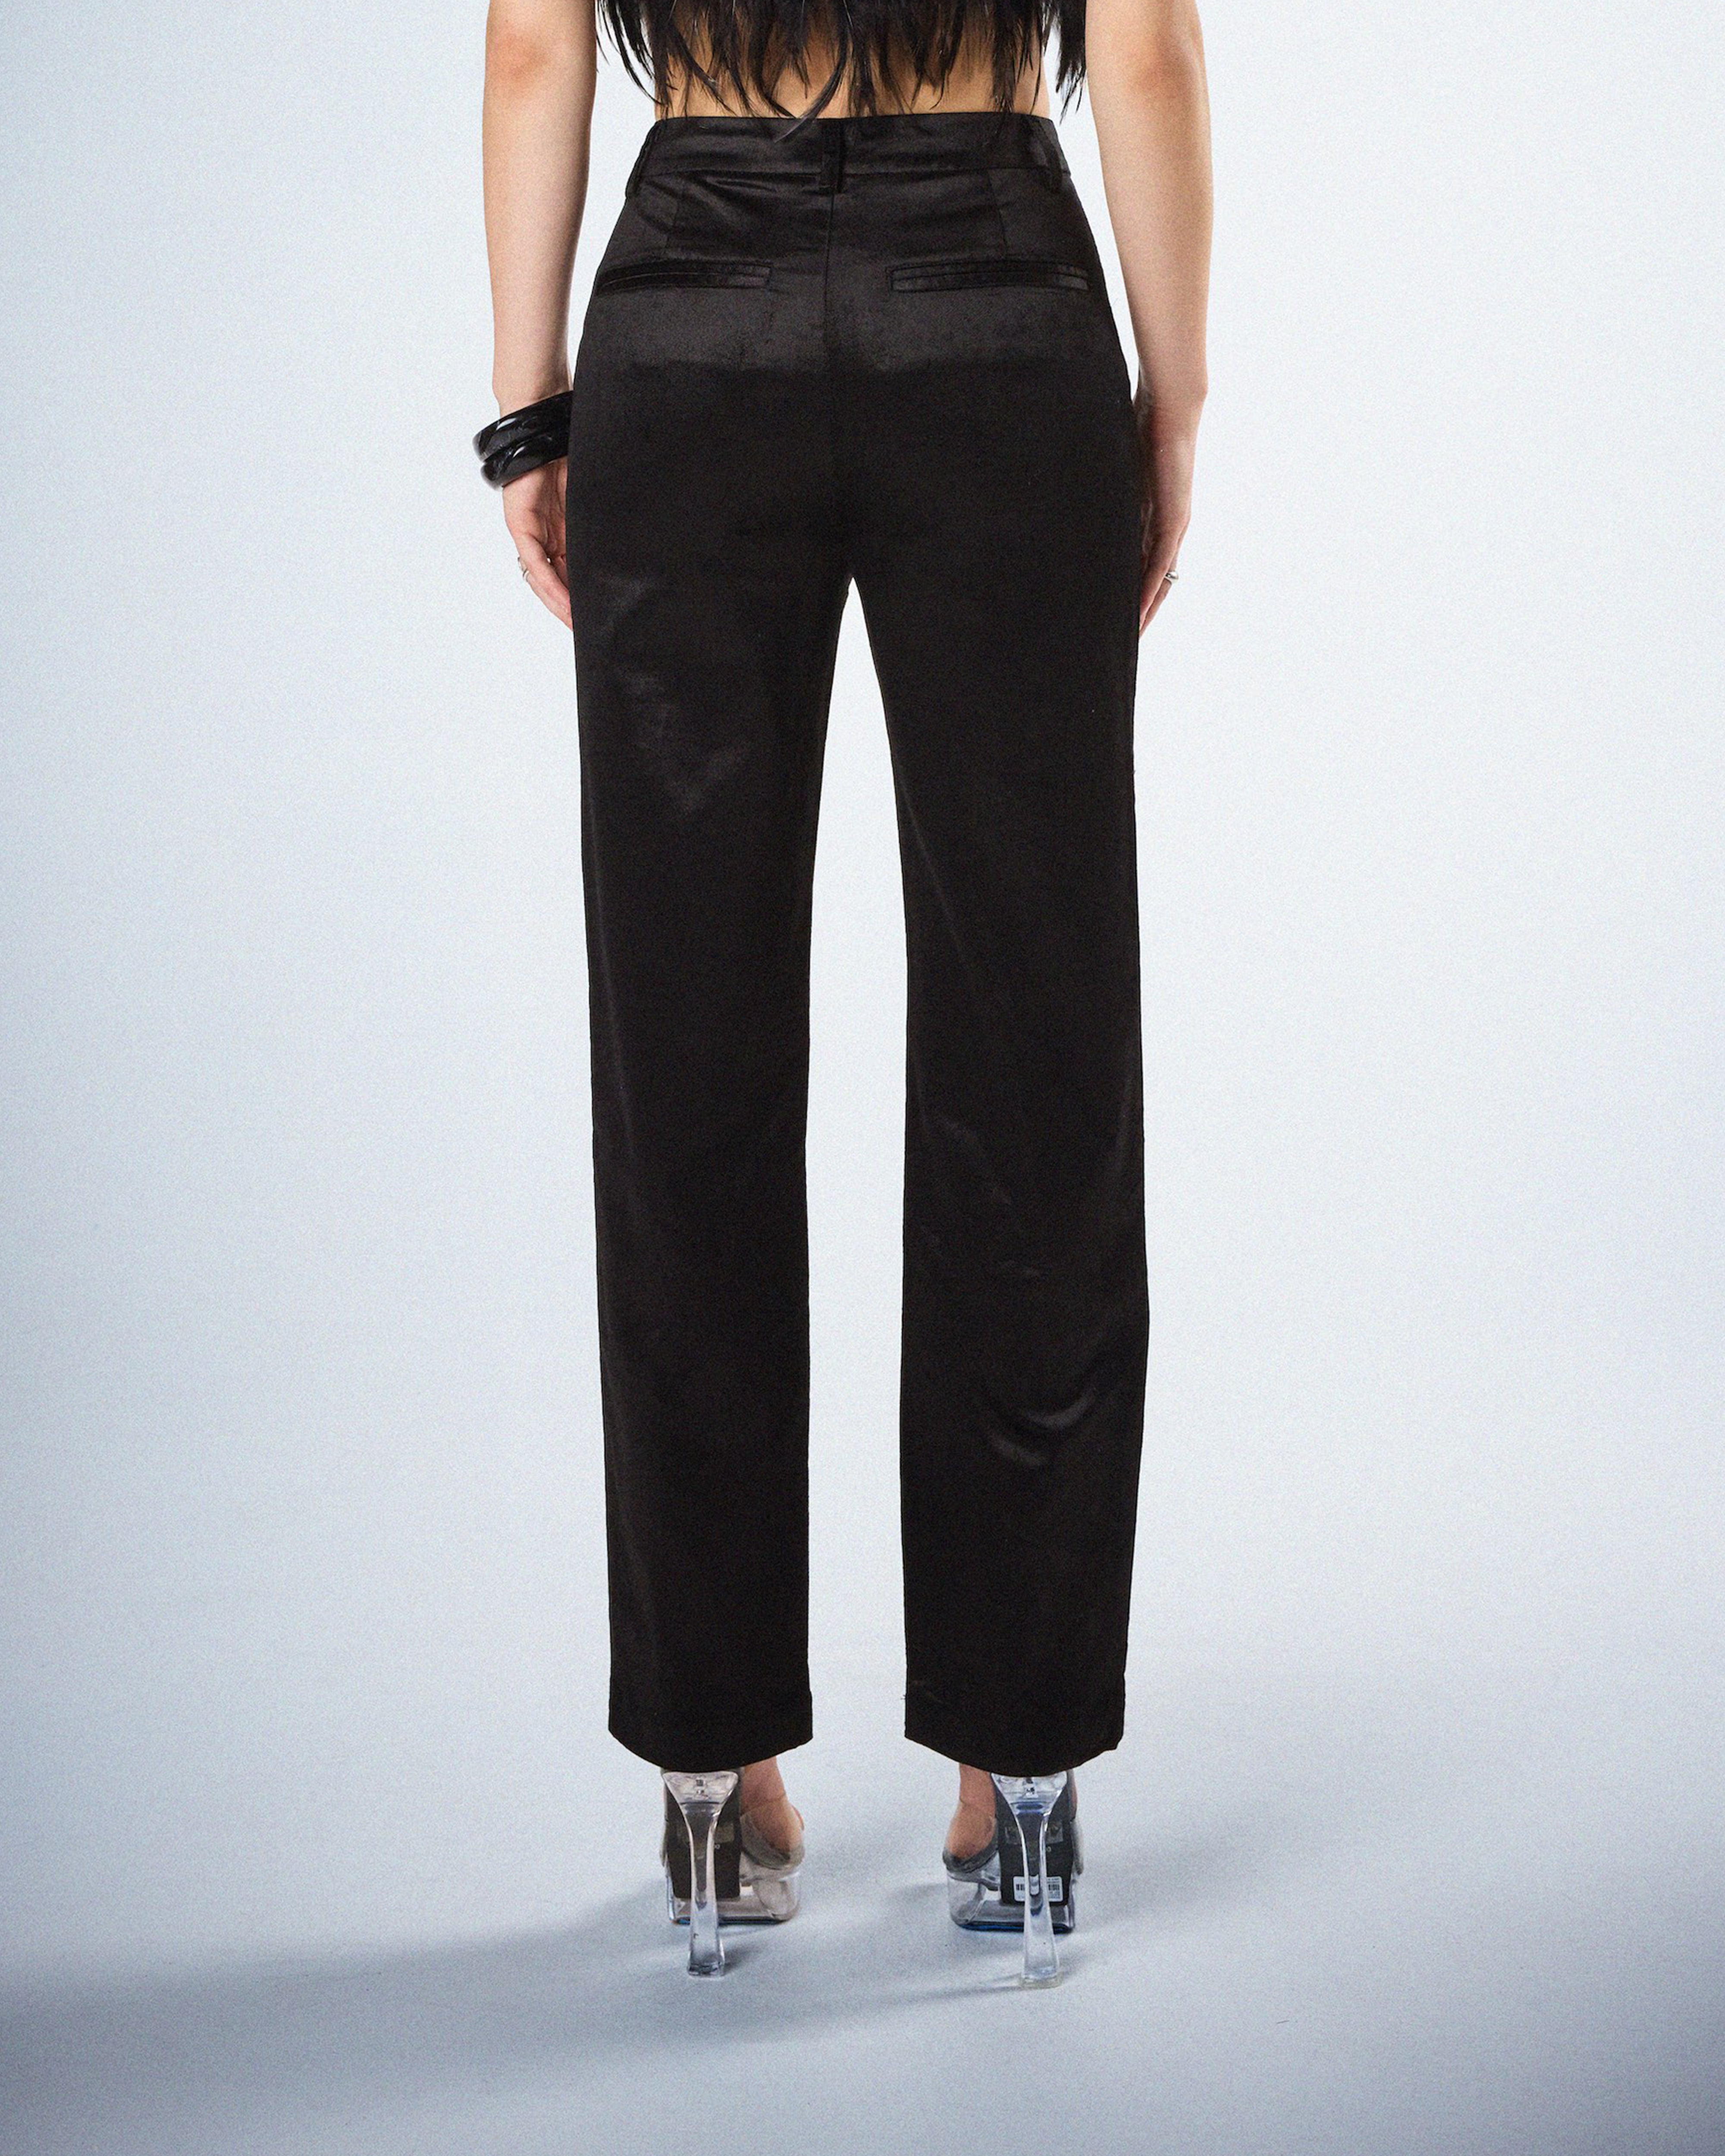 Velour Pants - Dark gray - Ladies | H&M US